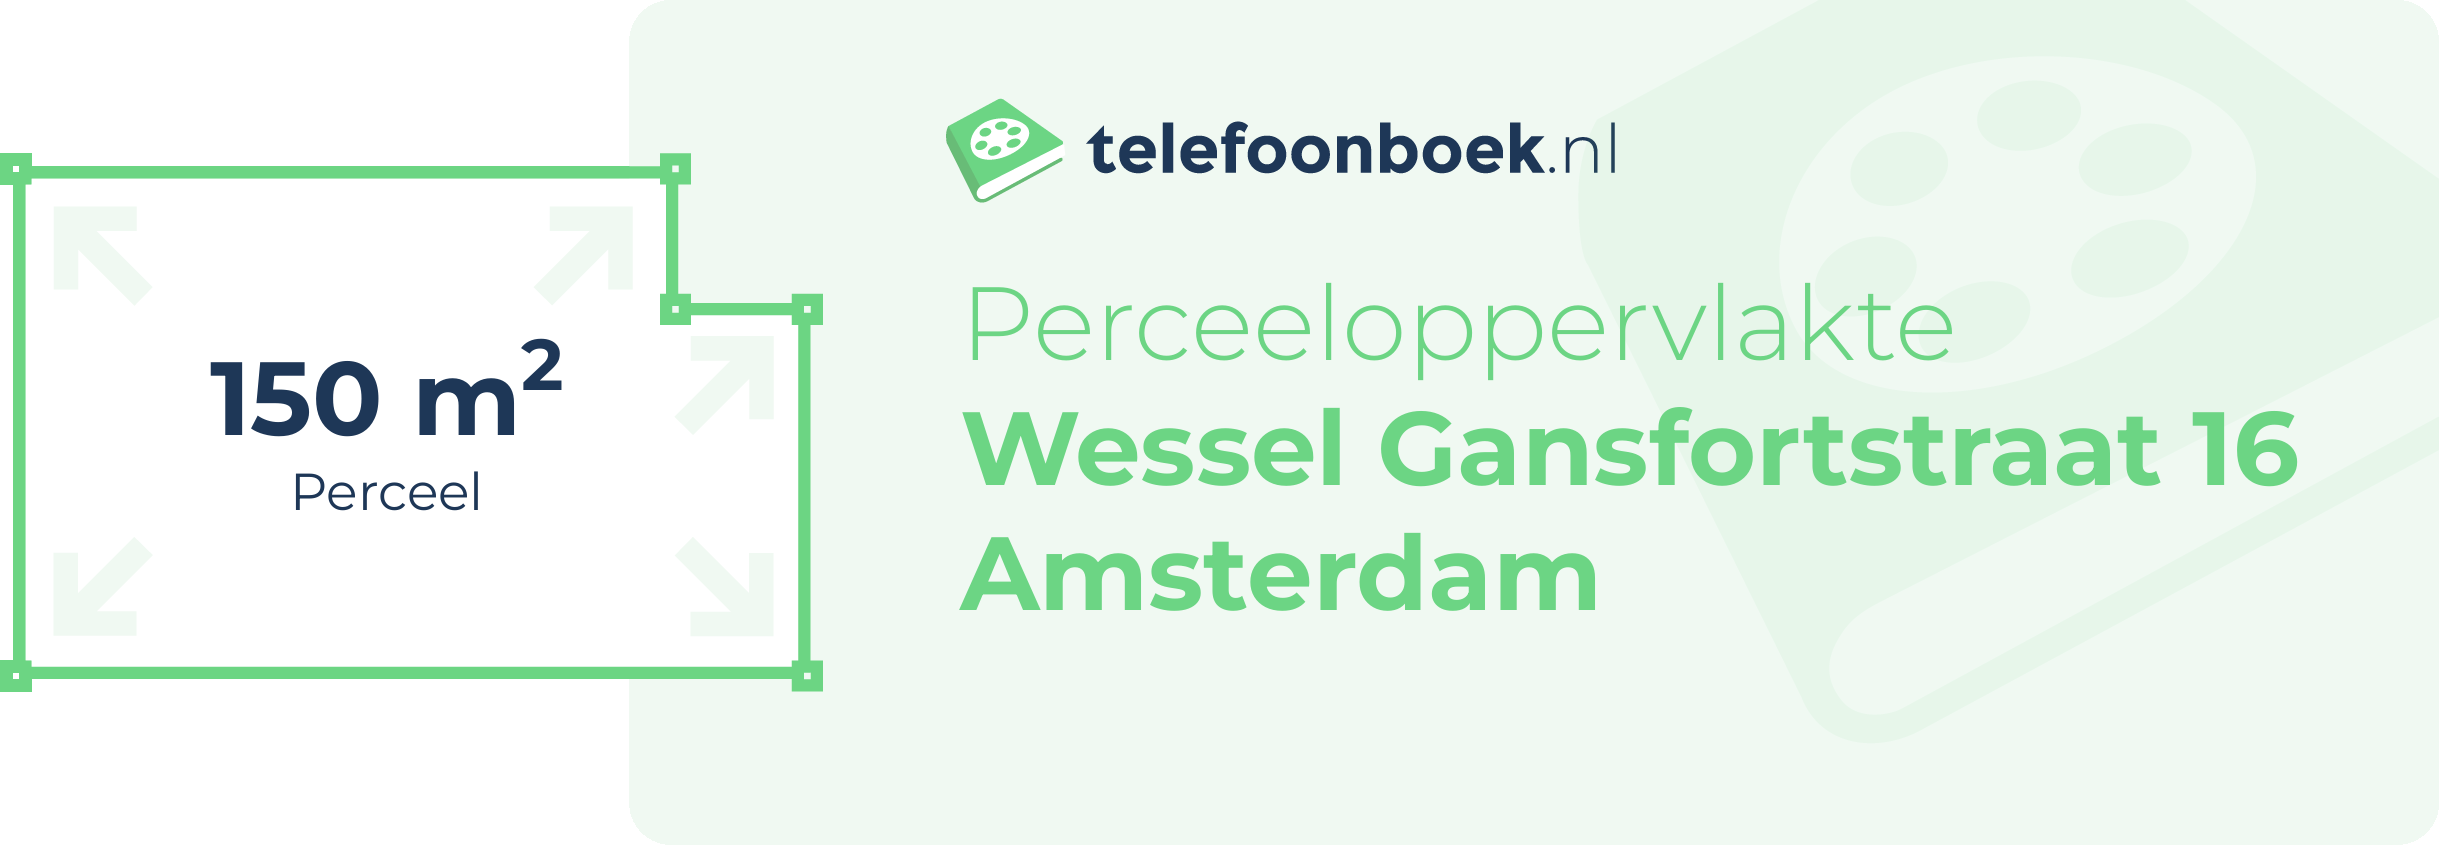 Perceeloppervlakte Wessel Gansfortstraat 16 Amsterdam